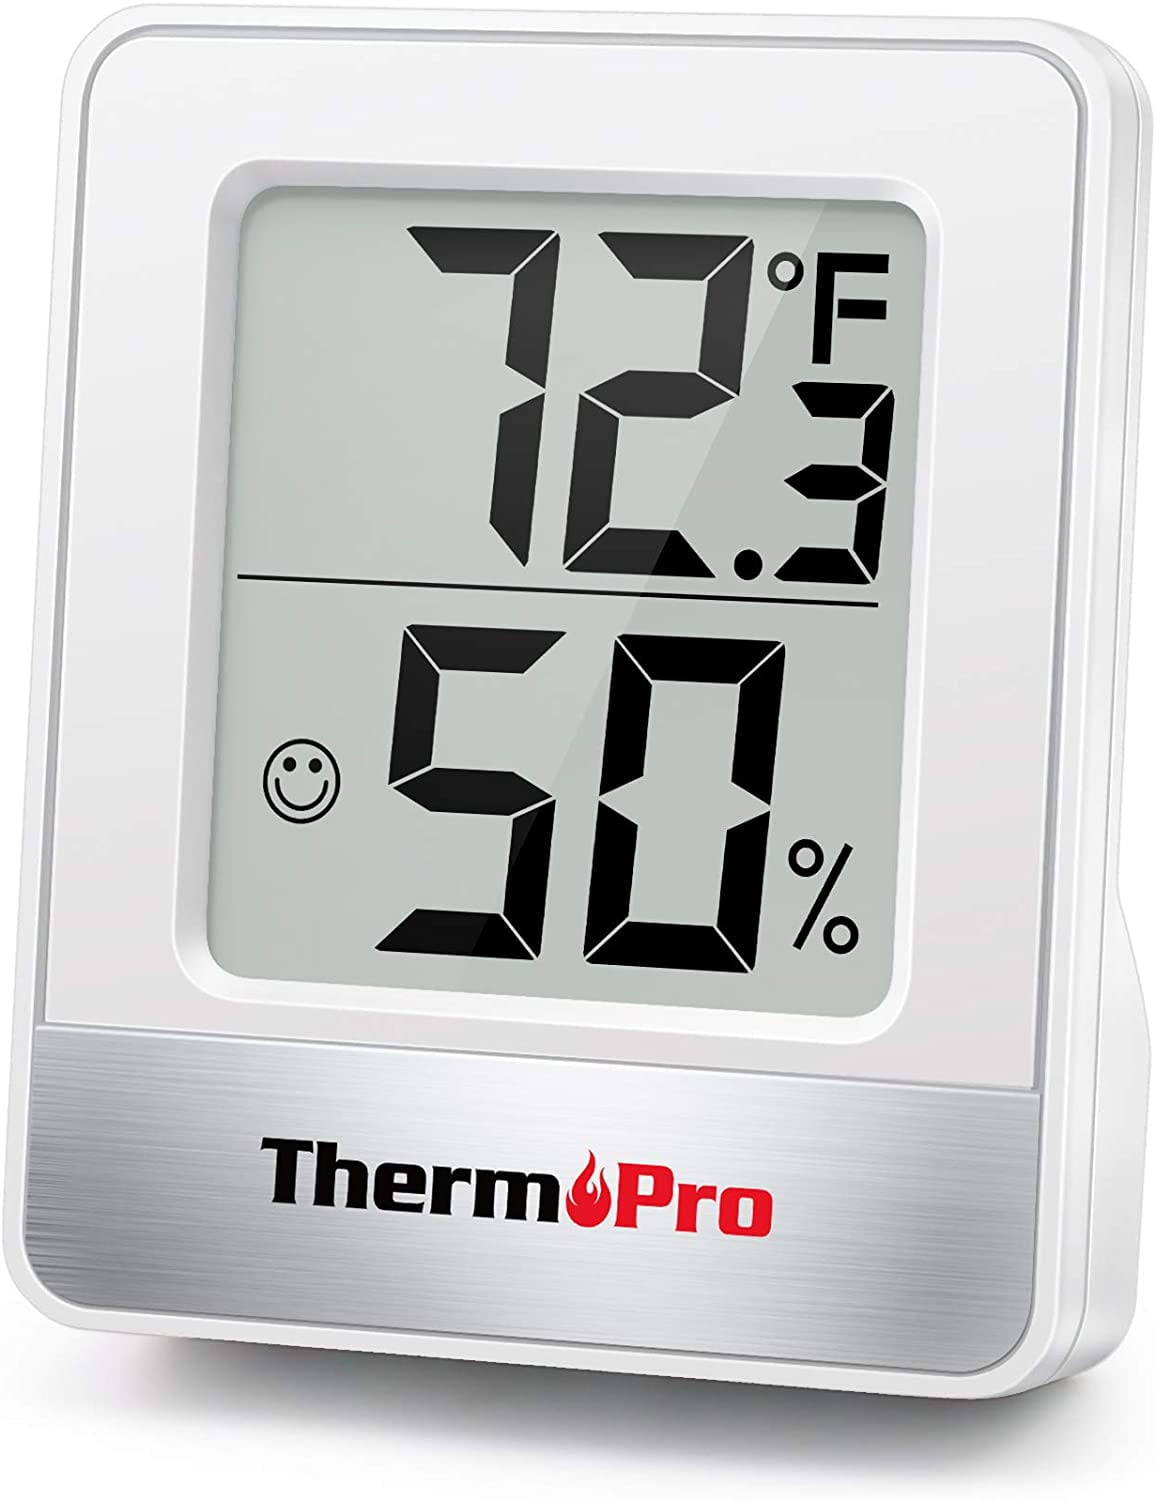 capetsma Aquarium Thermometer Digital Hygrometer for Reptile Terrarium Temperature and Humidity Monitor in Acrylic and G.